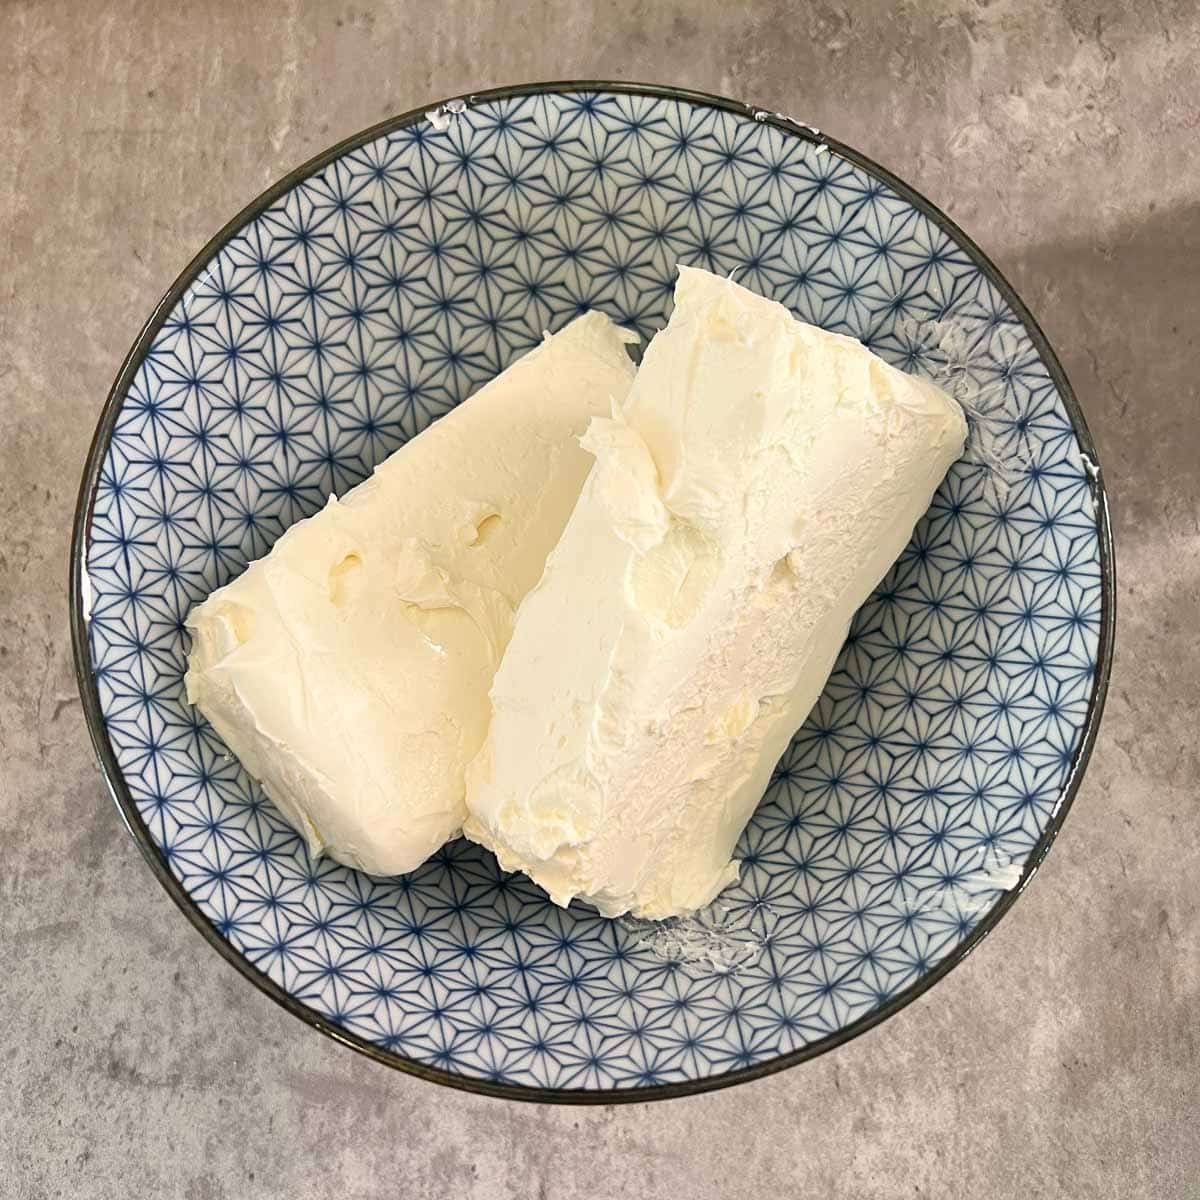 cream cheese blocks in bowl